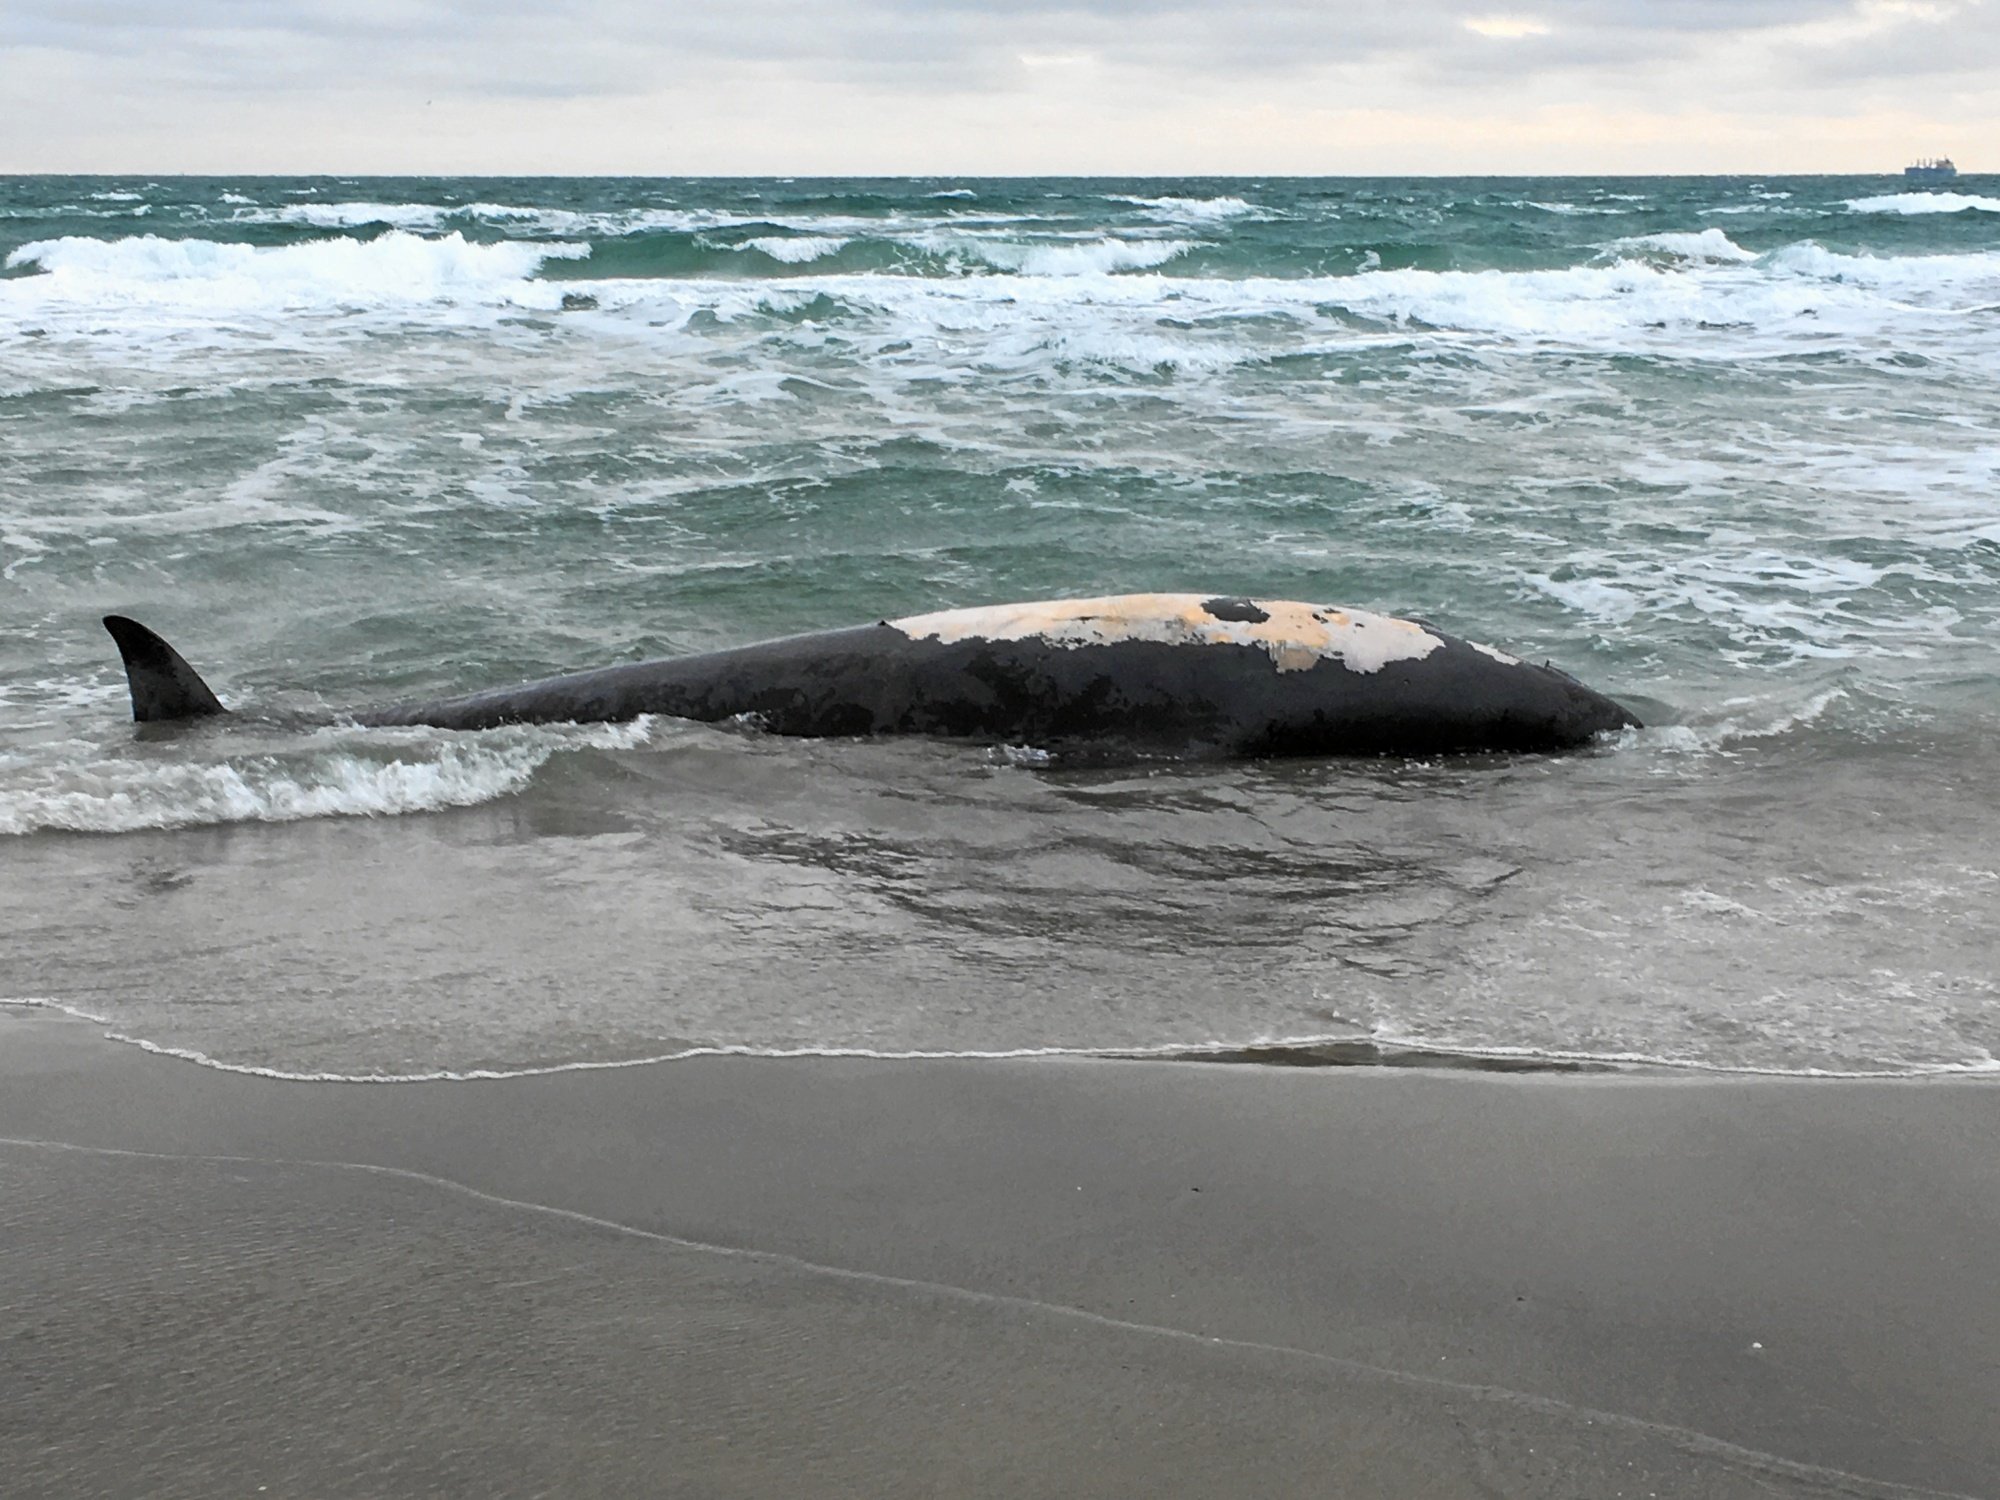 Død hval fundet på stranden i Skagen